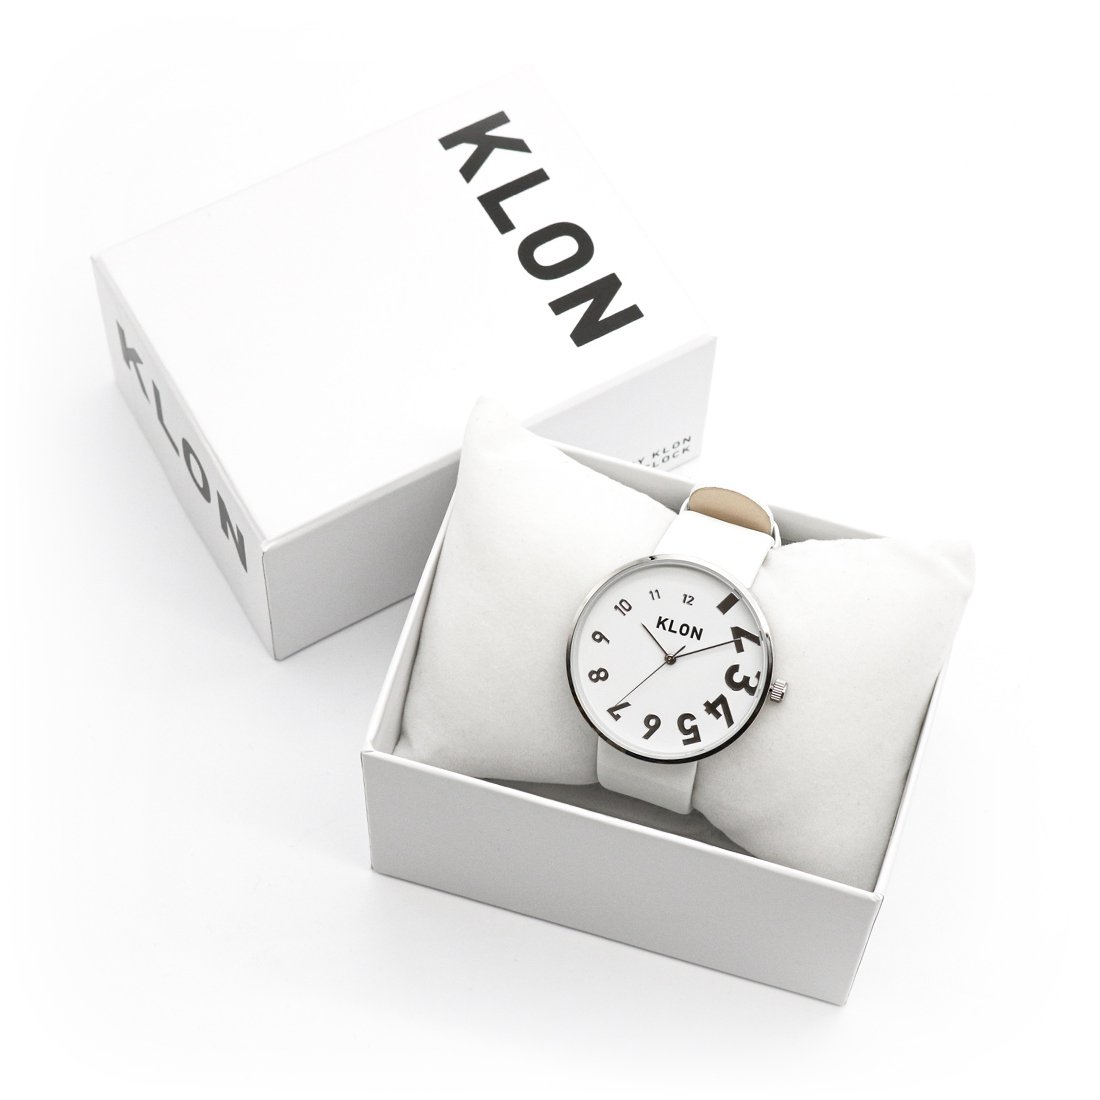 KLON EDDY TIME WHITE Ver.SILVER 40mm カジュアル 腕時計